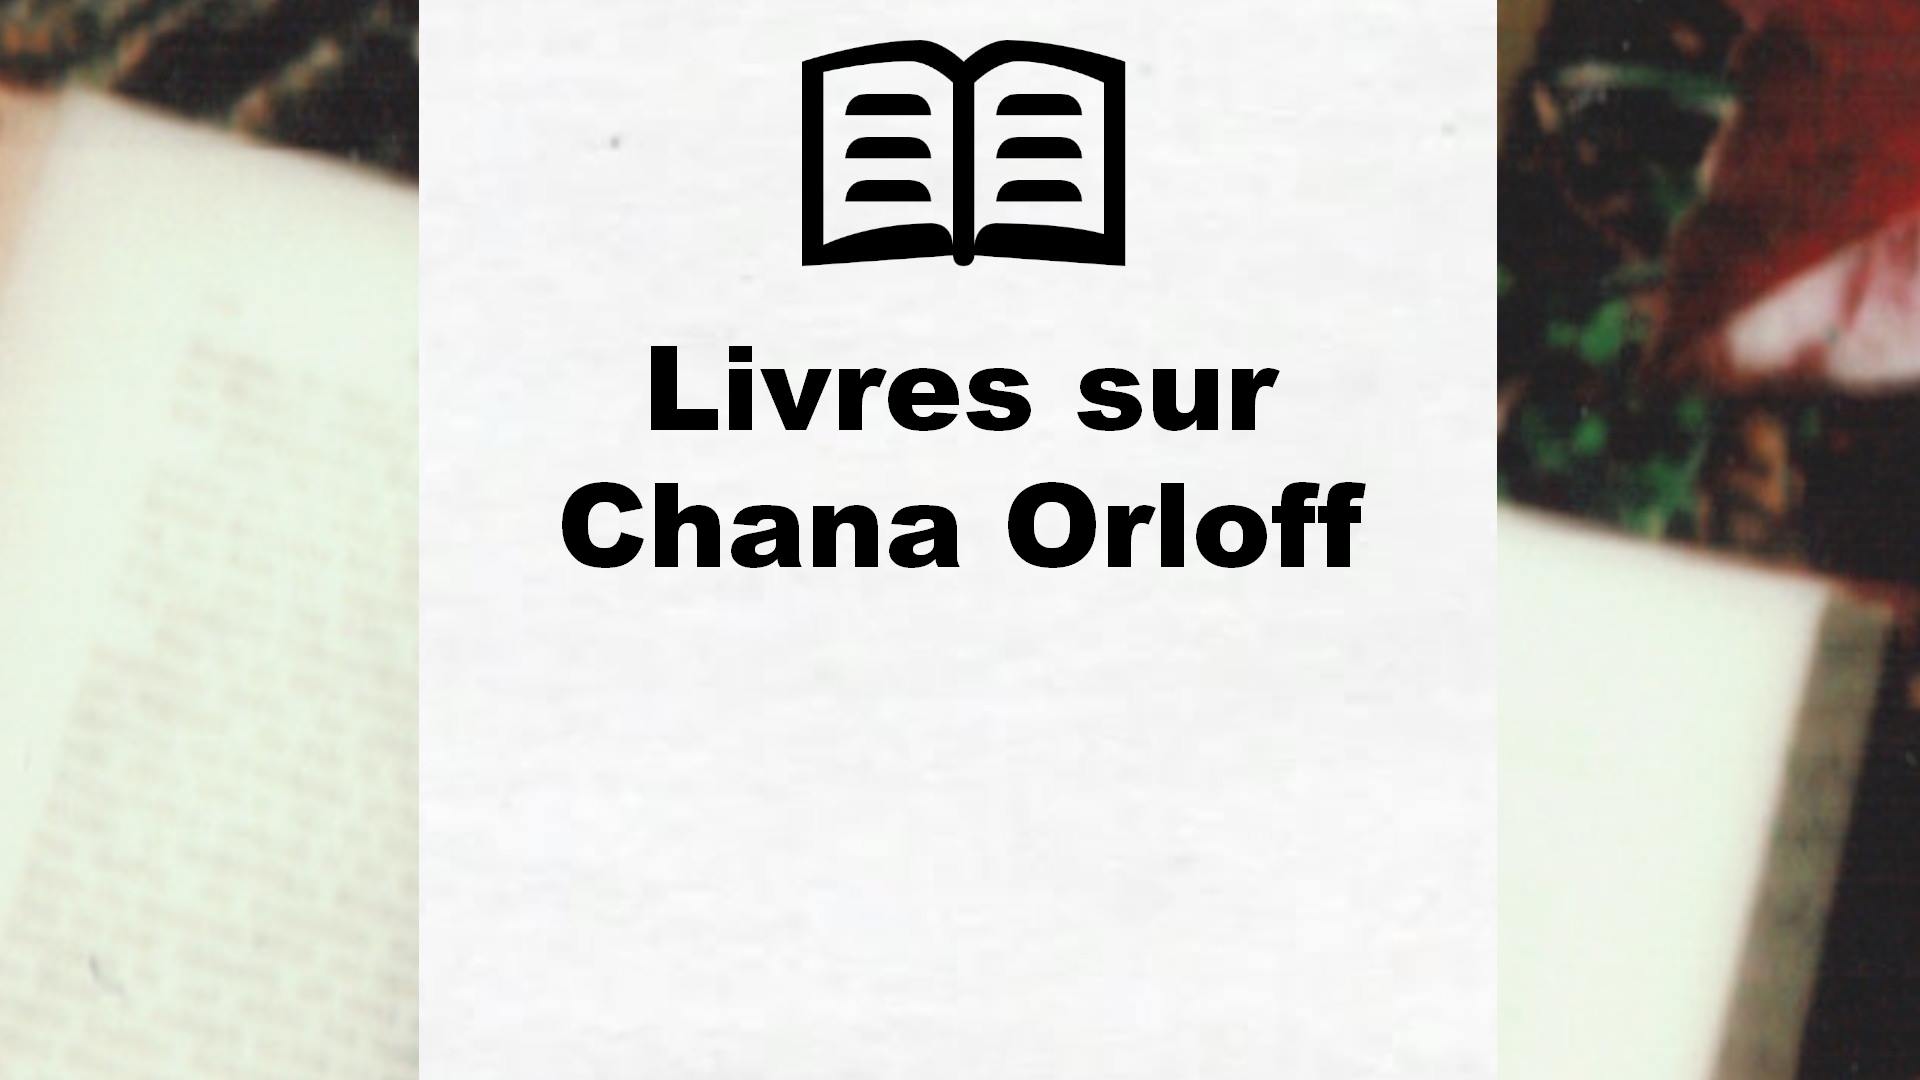 Livres sur Chana Orloff